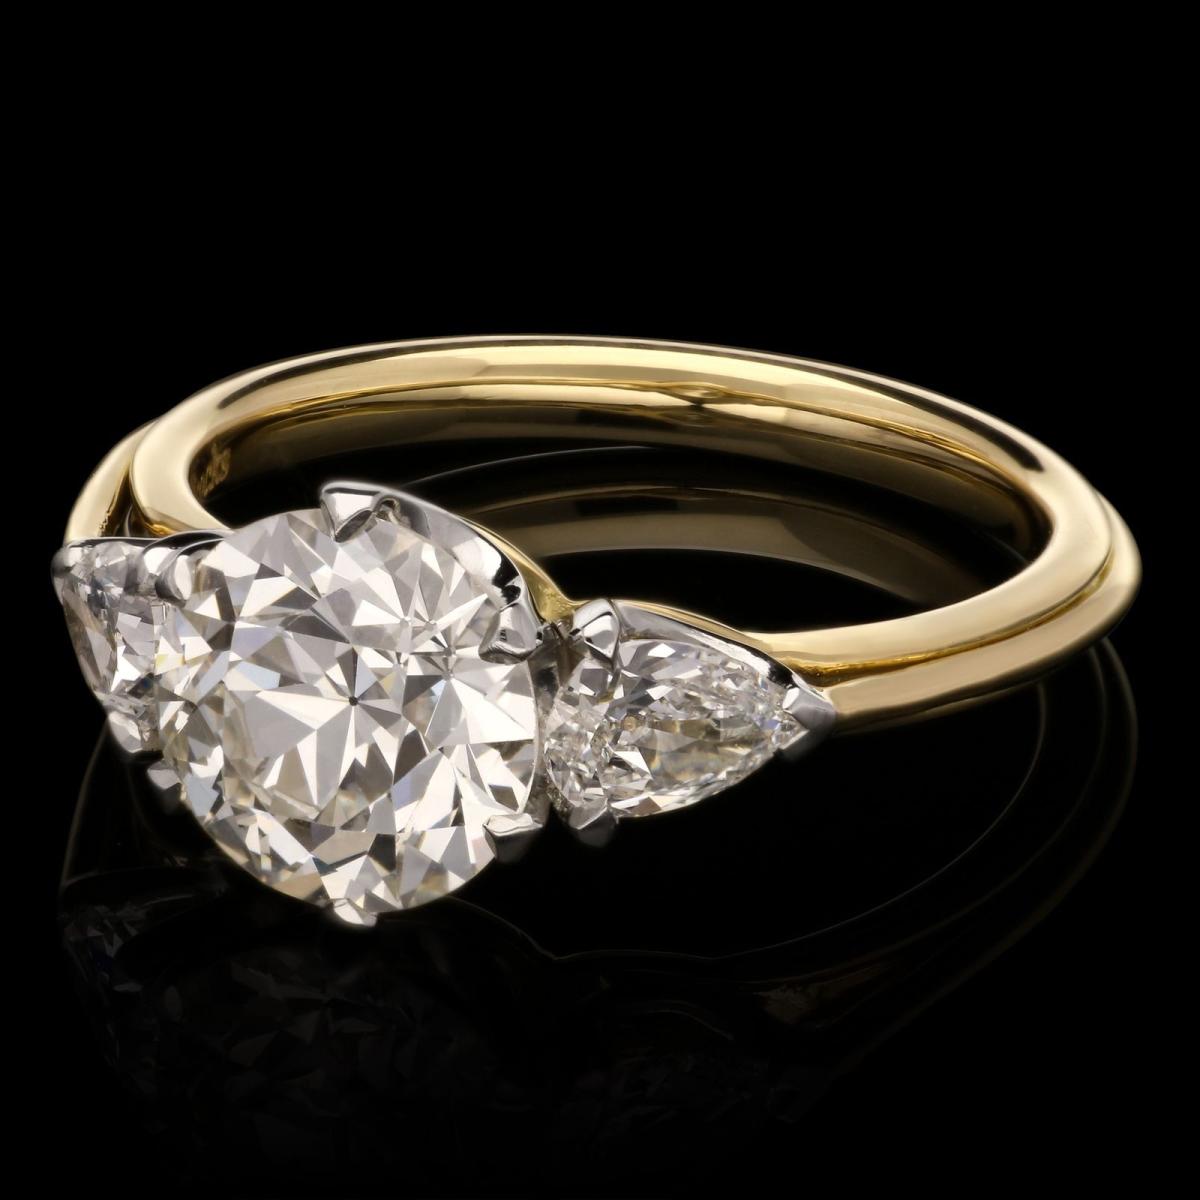 Hancocks 1.92ct Old European Cut And Pear Shape Diamond Ring Contemporary